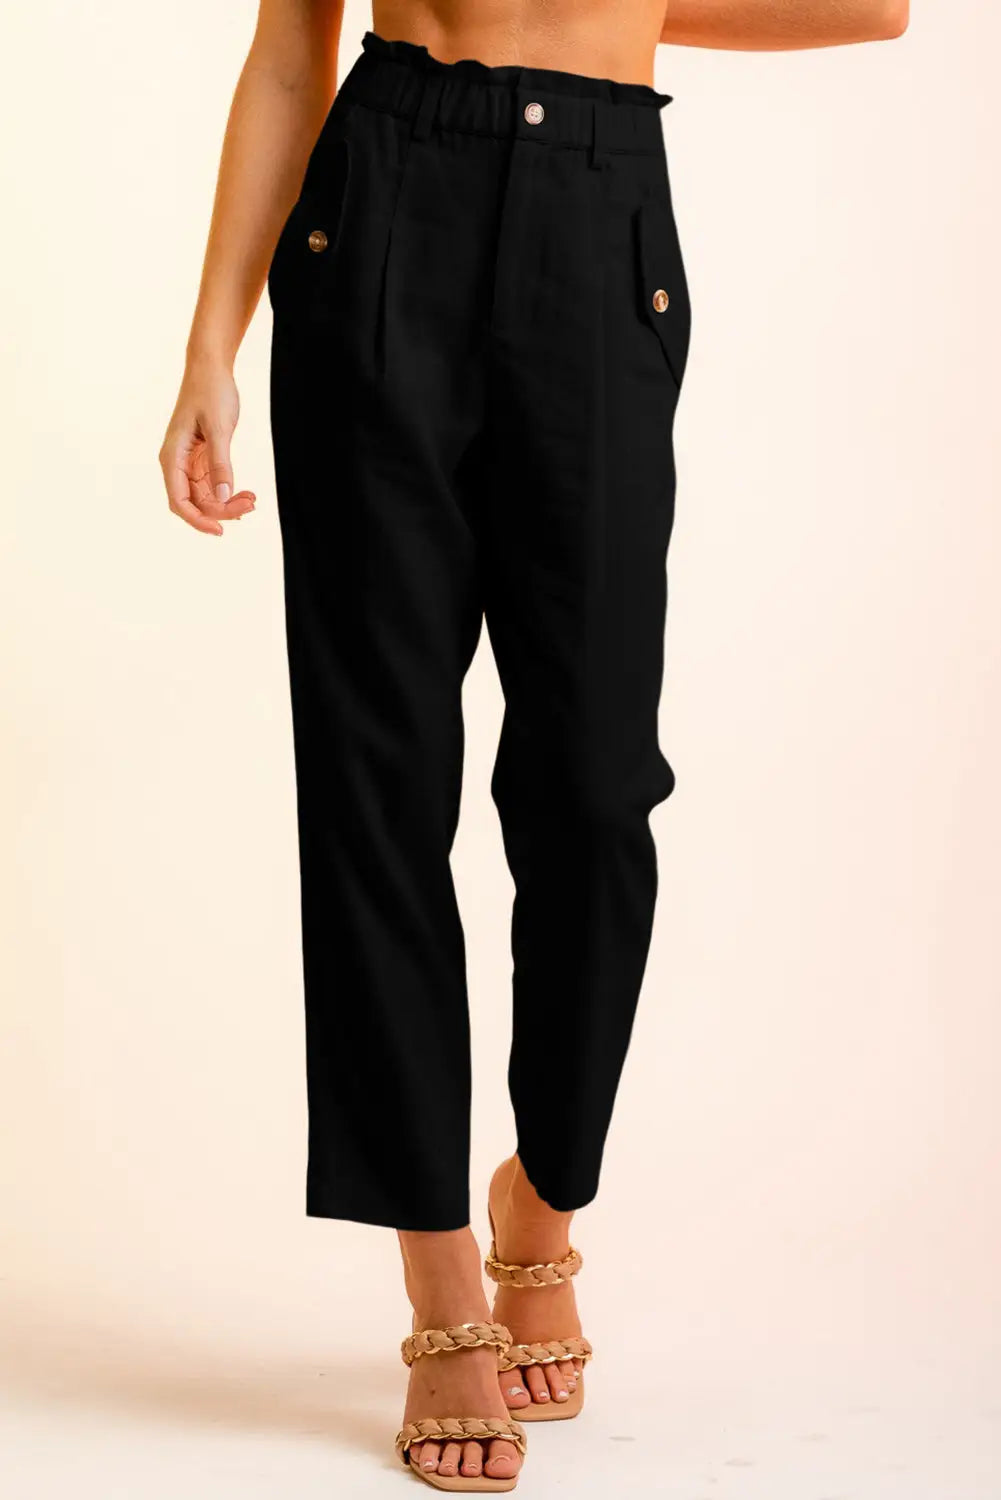 Brown button flap pocket high waisted linen pants - black / s / 80% viscose + 20% linen - straight